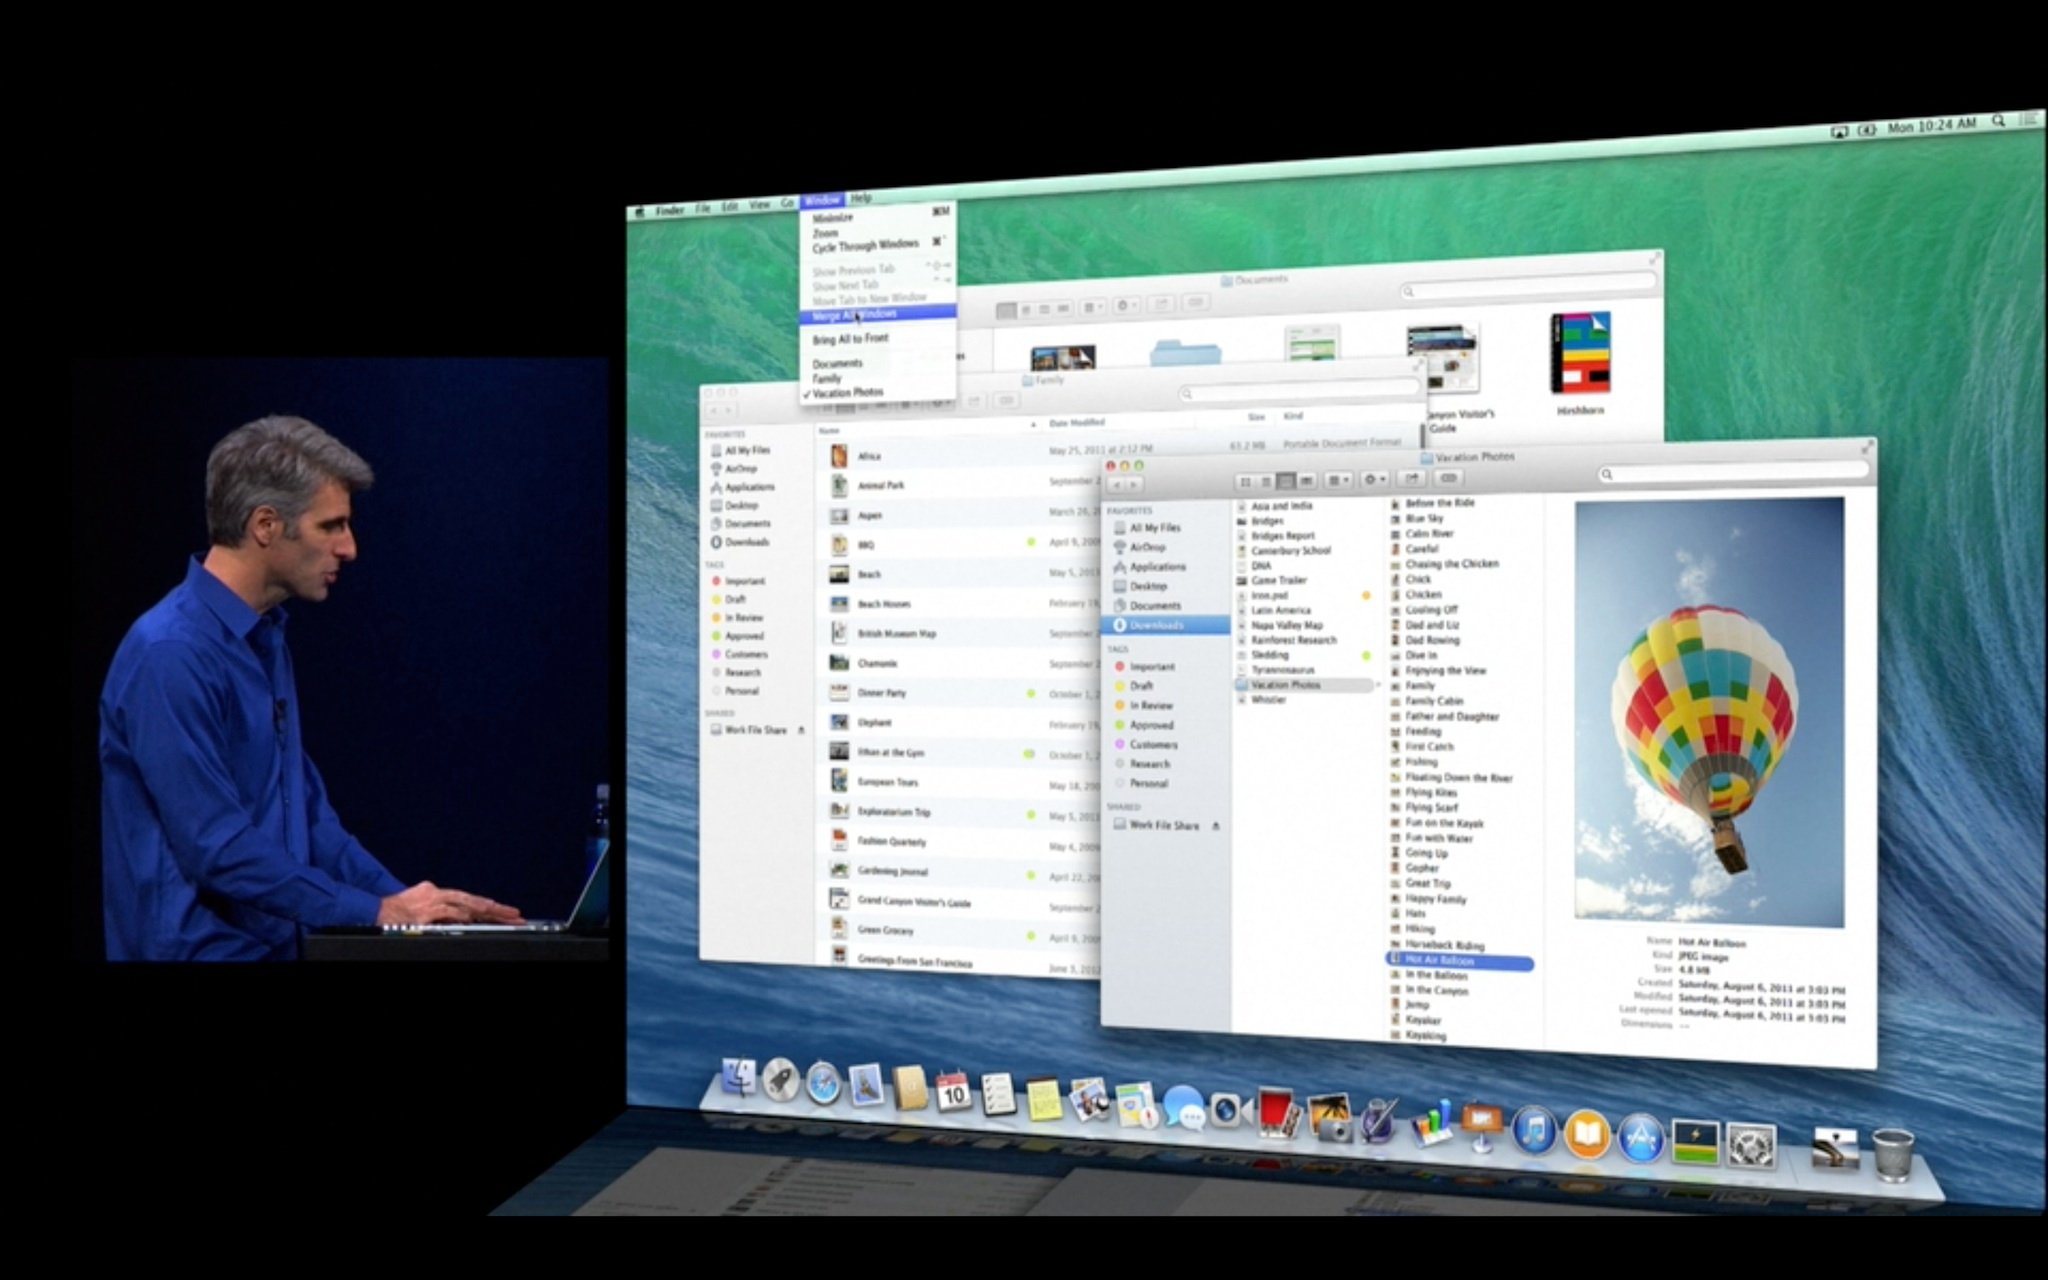 OS X Mavericks Preview: Finder Tabs gathering